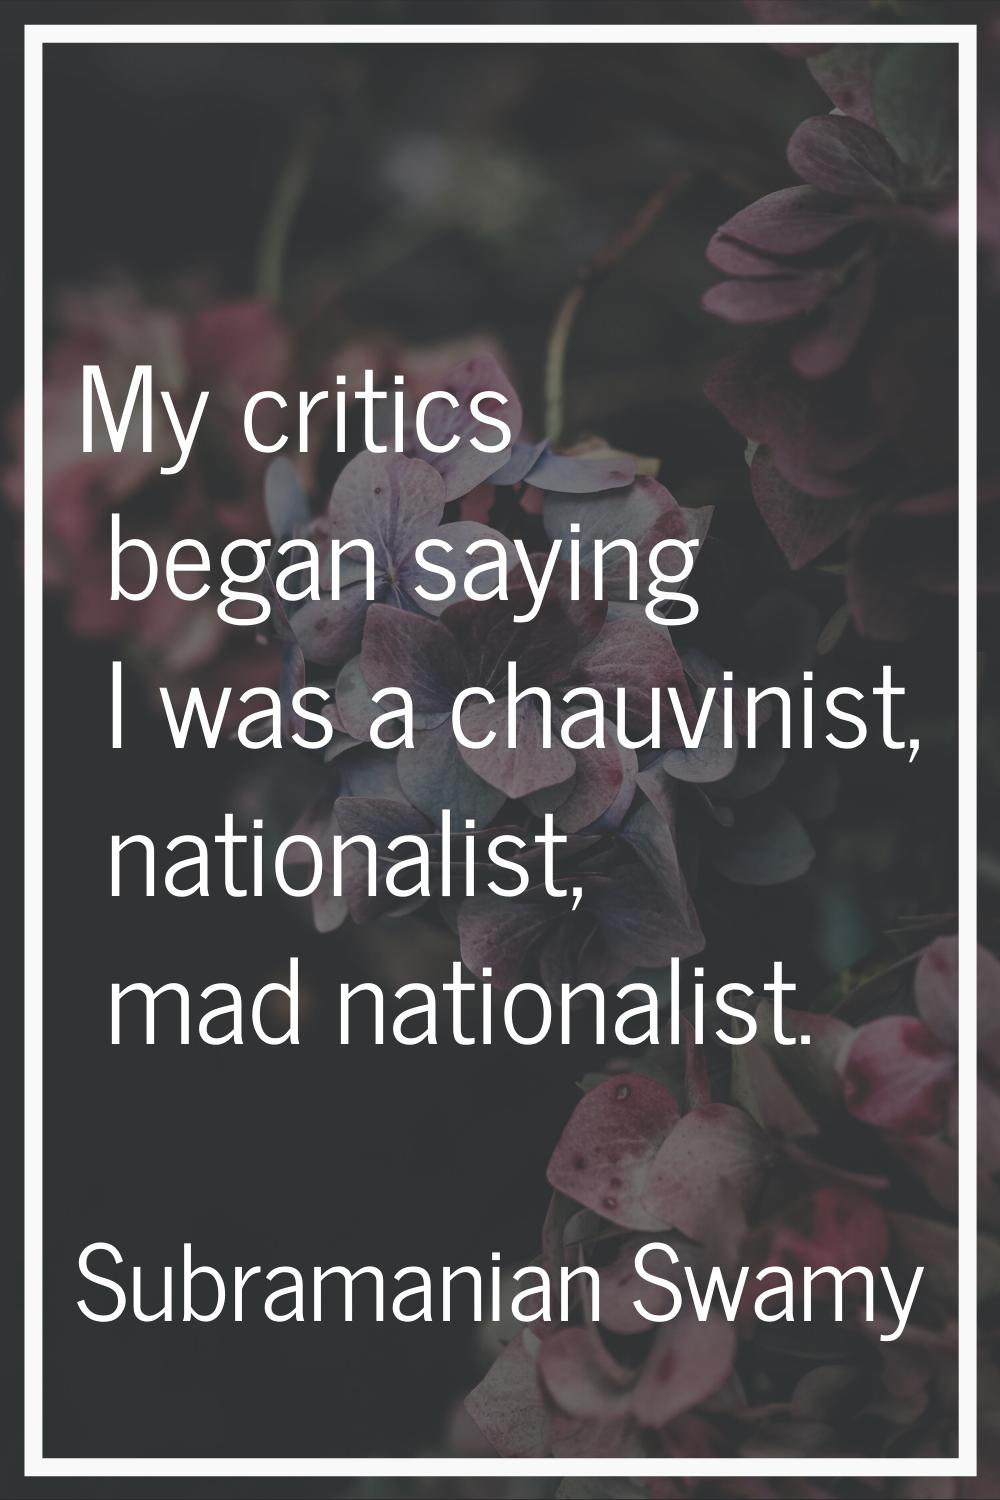 My critics began saying I was a chauvinist, nationalist, mad nationalist.